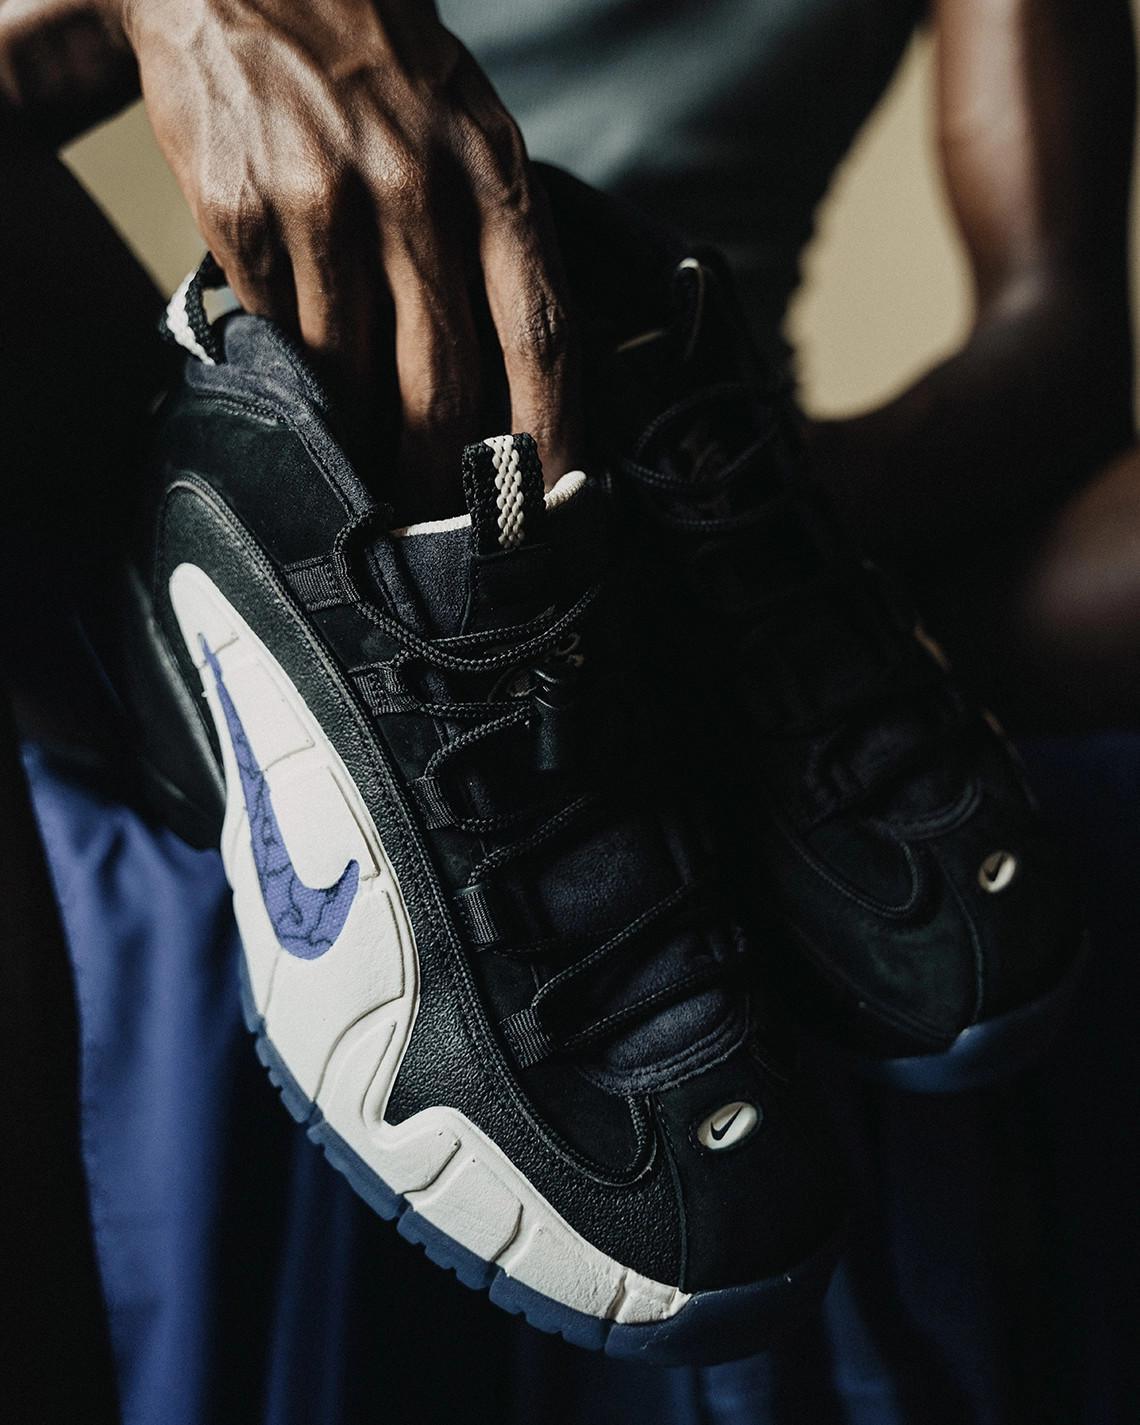 Social Status annonce la date de sortie de la Nike Air Max Penny 1 "Recess".